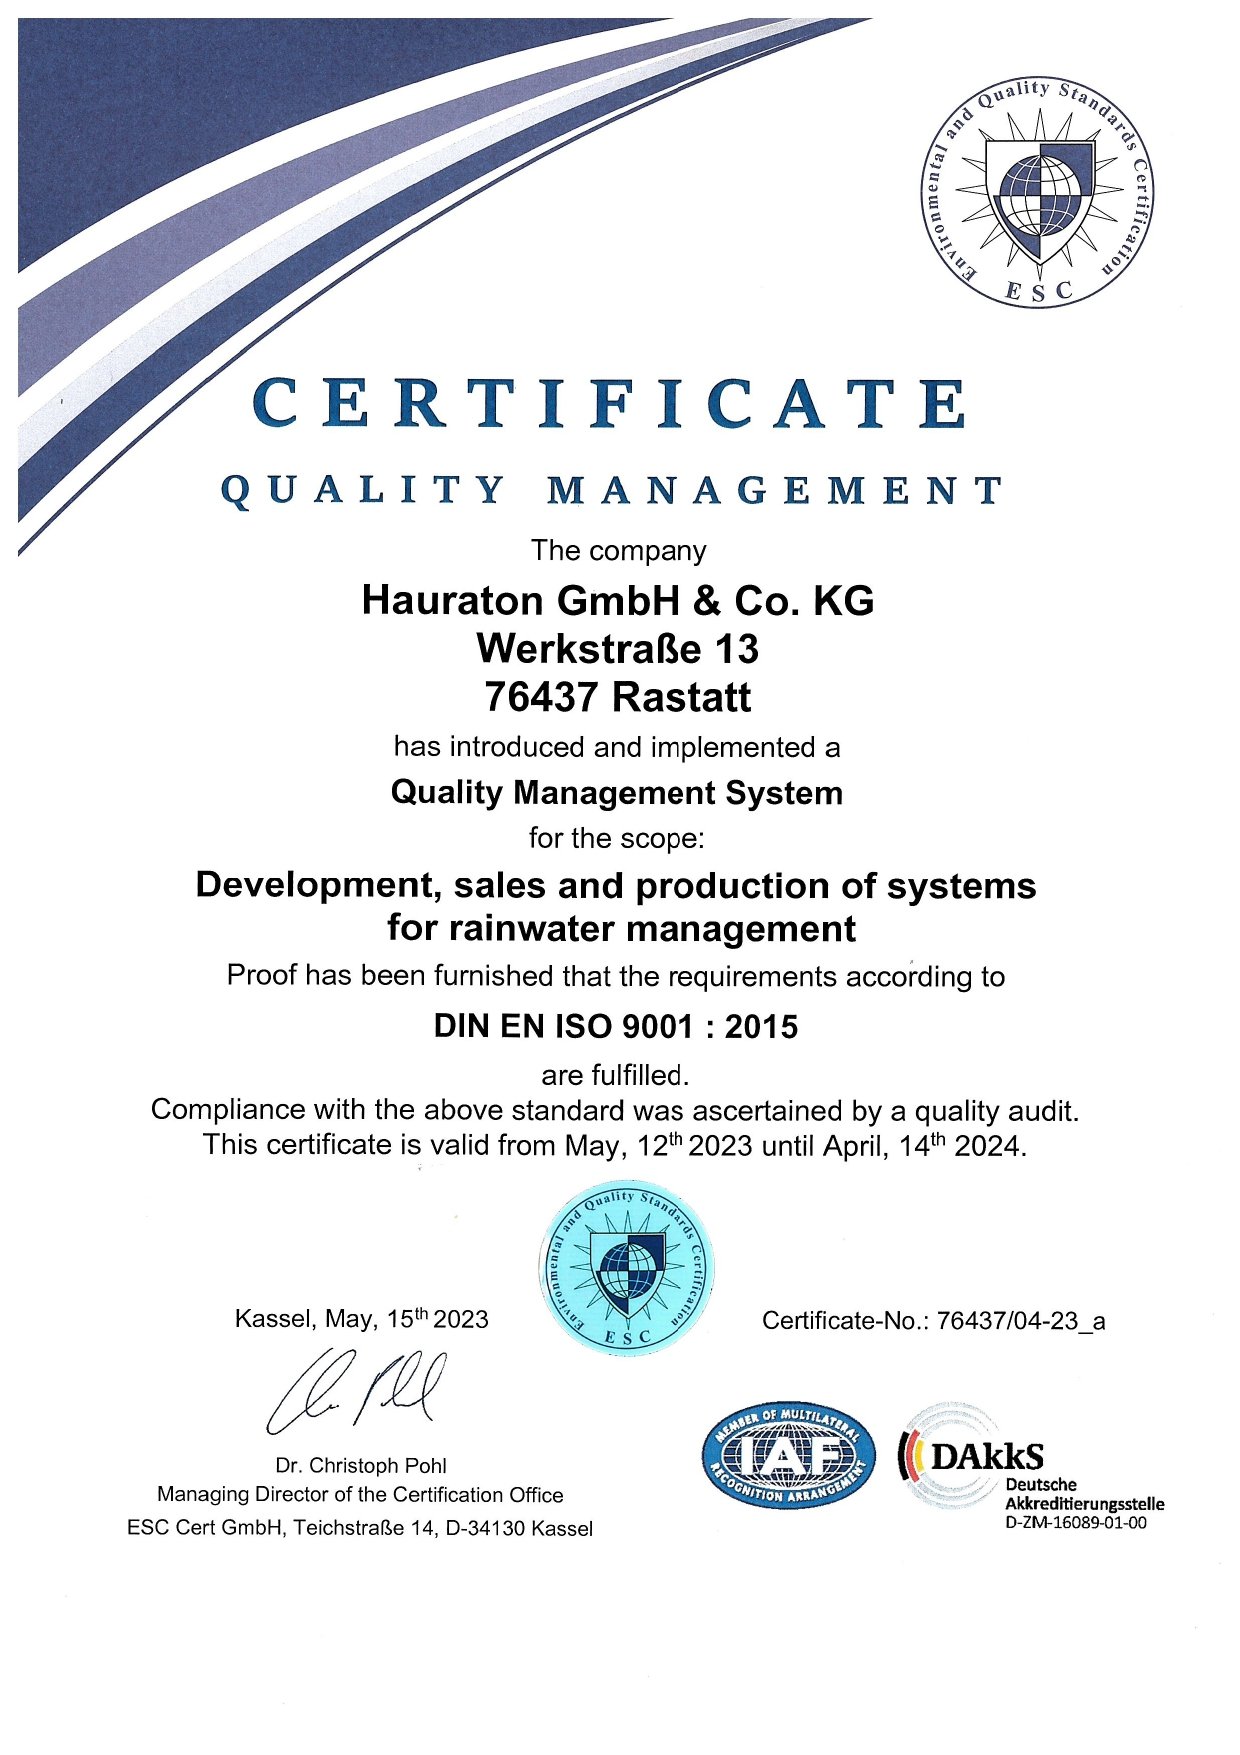 Hauraton Enviromental management certificate